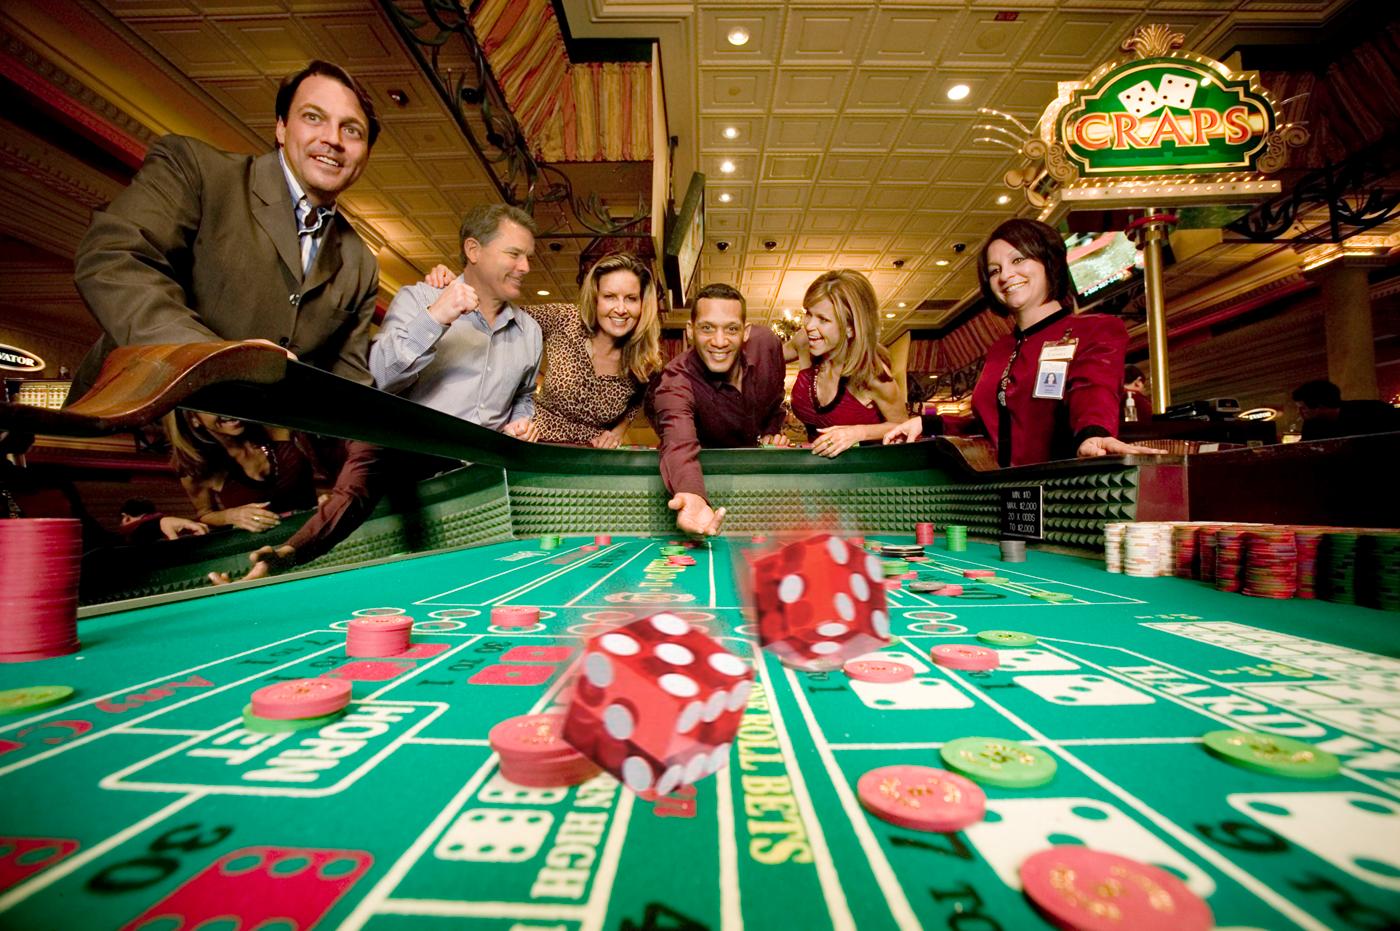 100 best online casinos